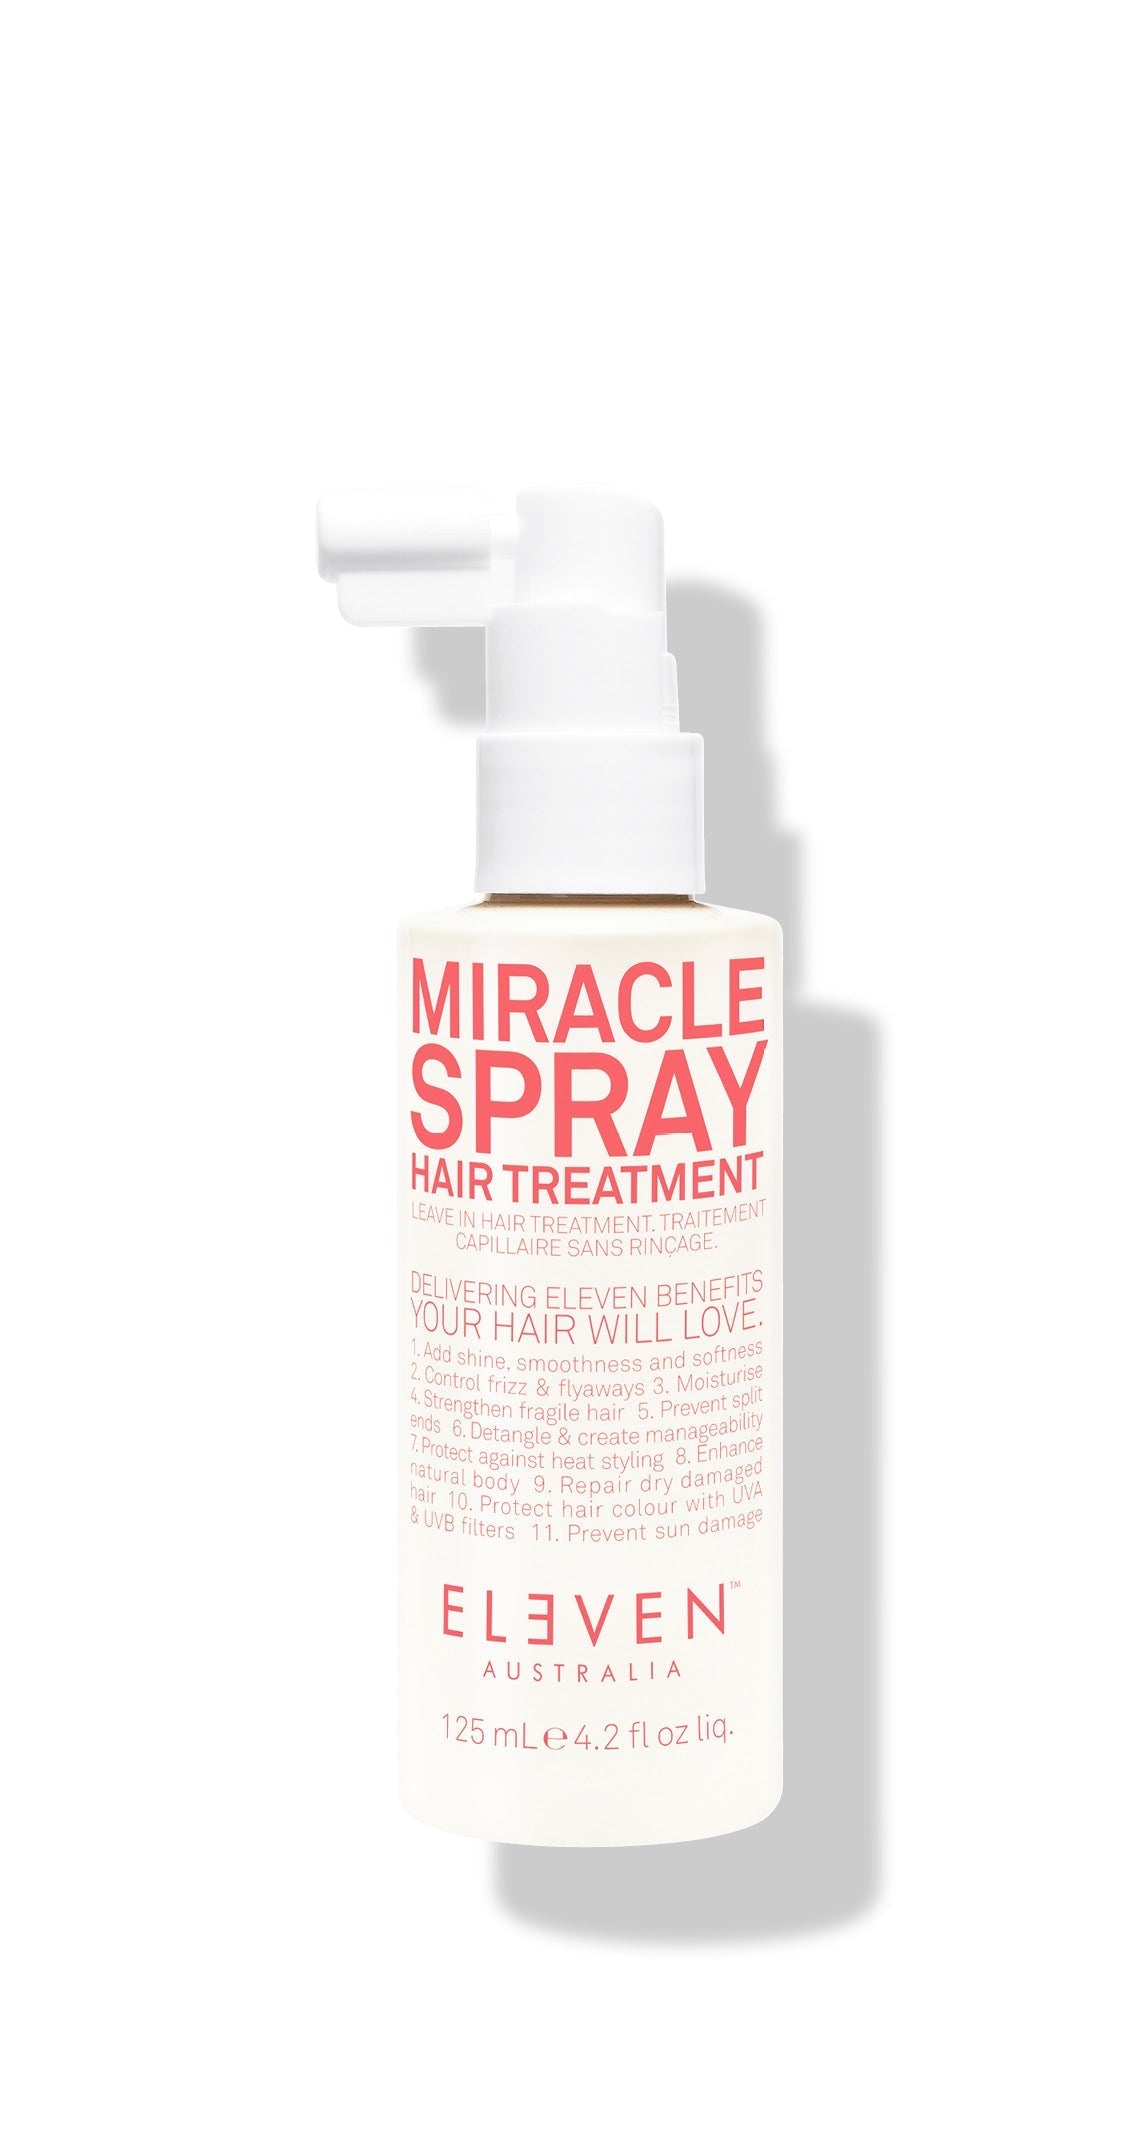 Miracle Spray Hair Treatment - 125ml - ELEVEN Australia